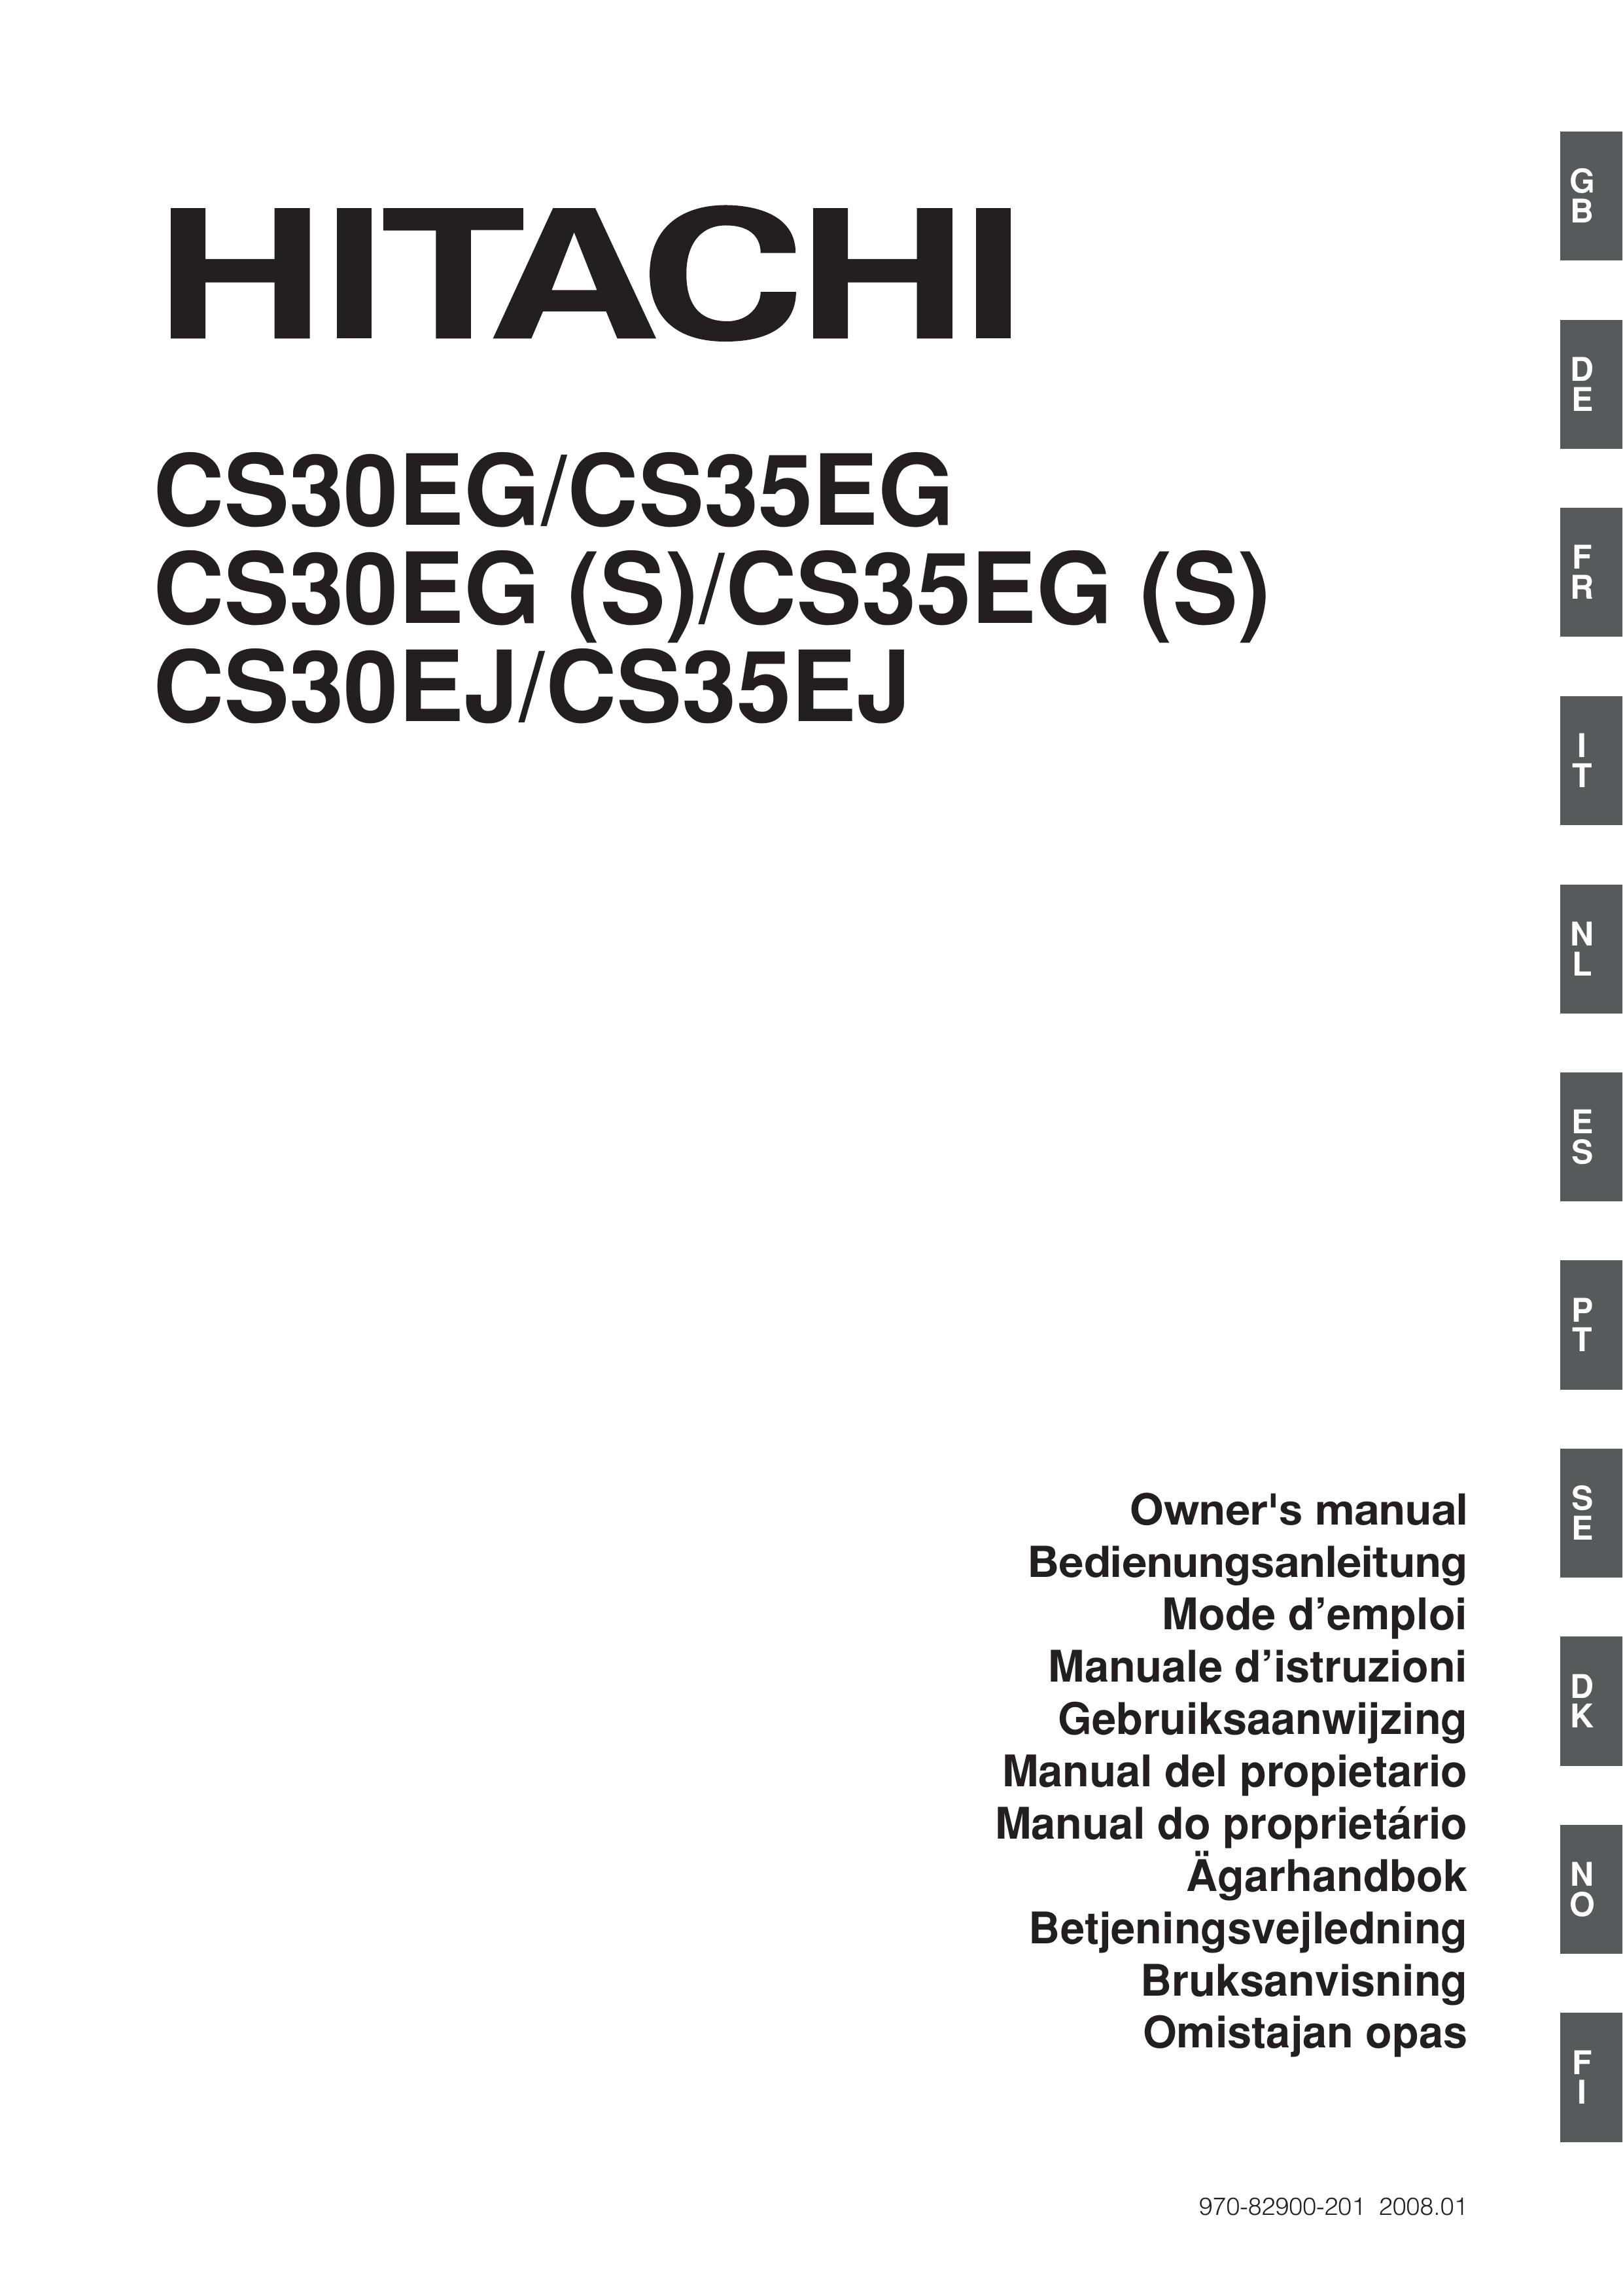 Hitachi CS35EG (S) Chainsaw User Manual